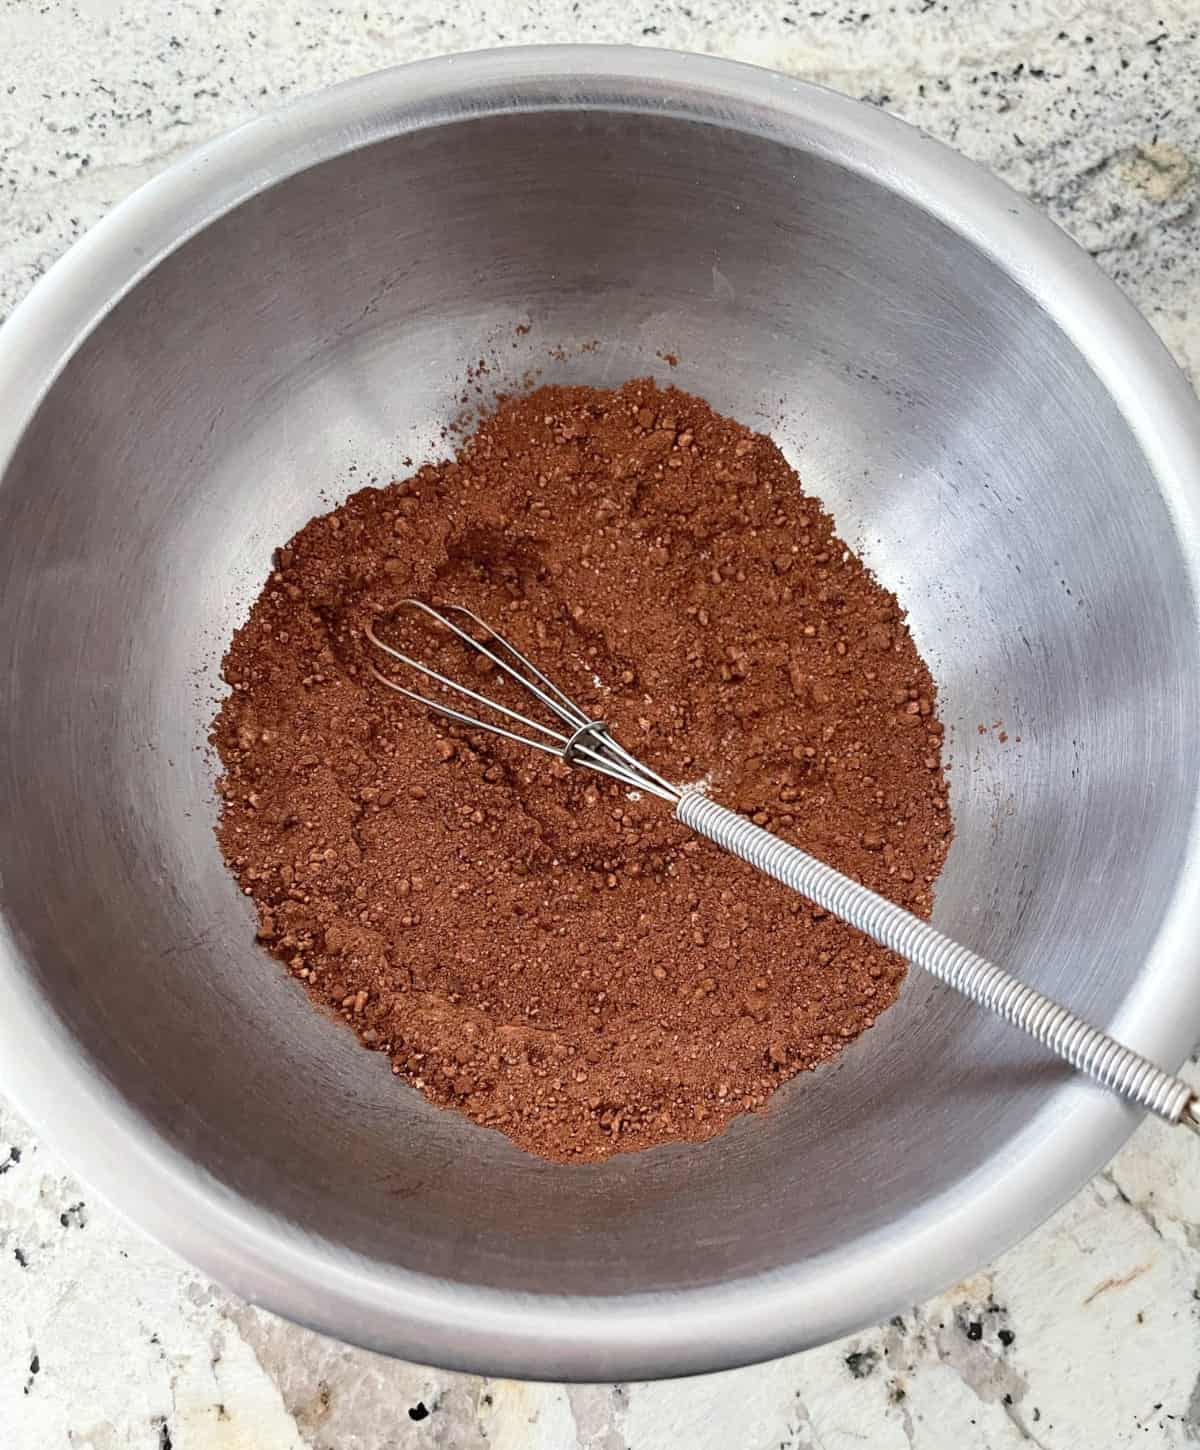 Whisking dark cocoa powder, peanut butter powder, baking powder and Truvia zero calorie sweetener in small bowl.